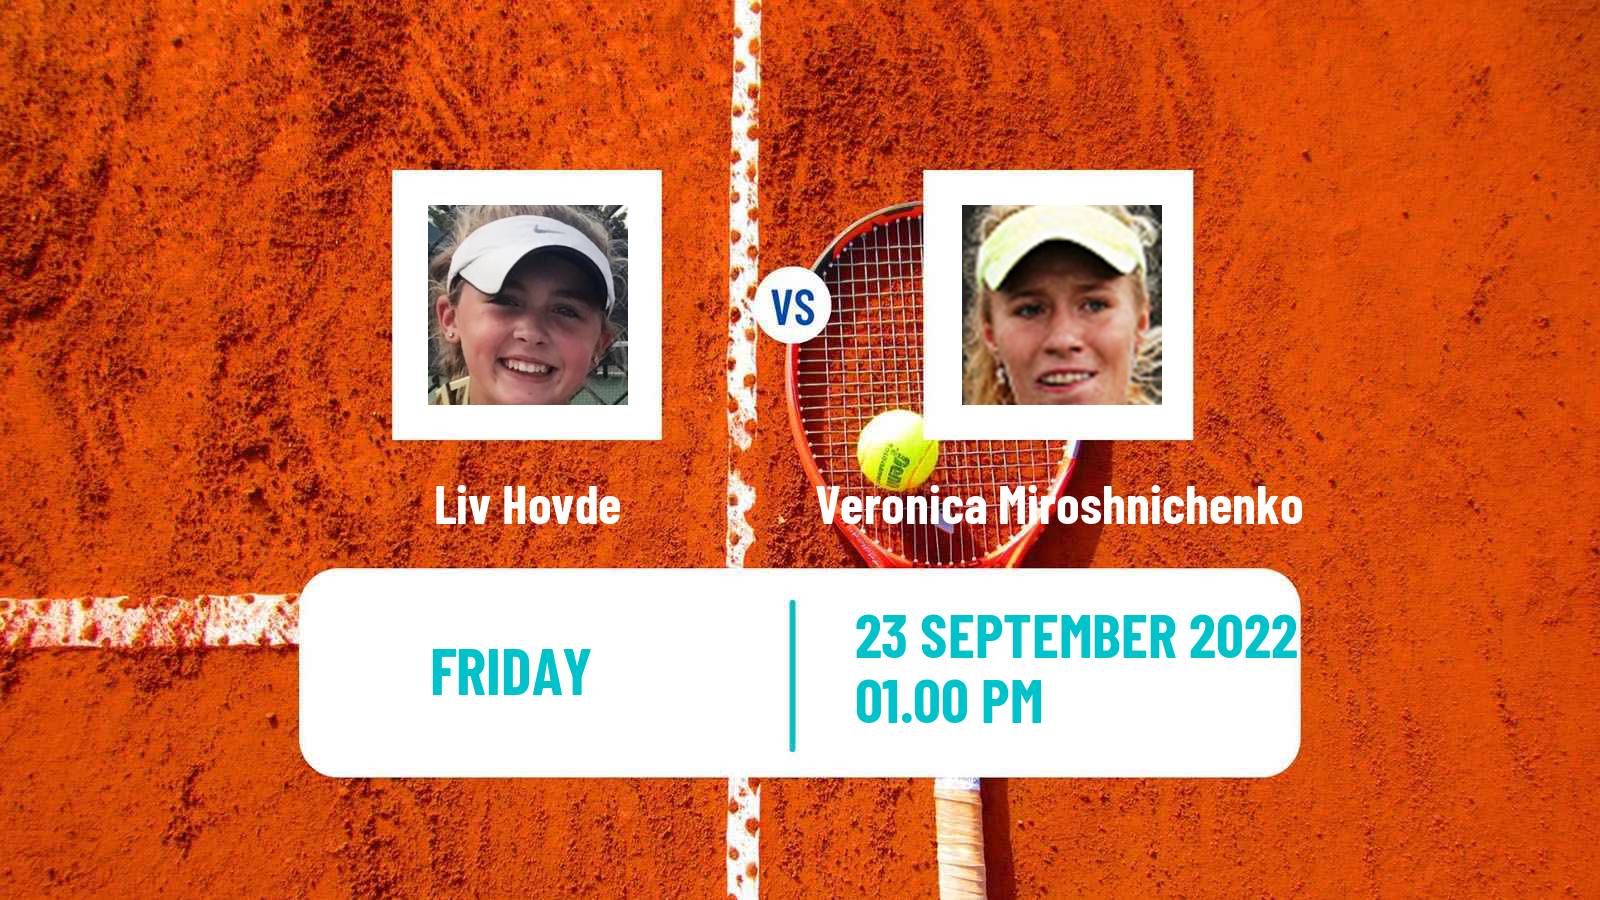 Tennis ITF Tournaments Liv Hovde - Veronica Miroshnichenko